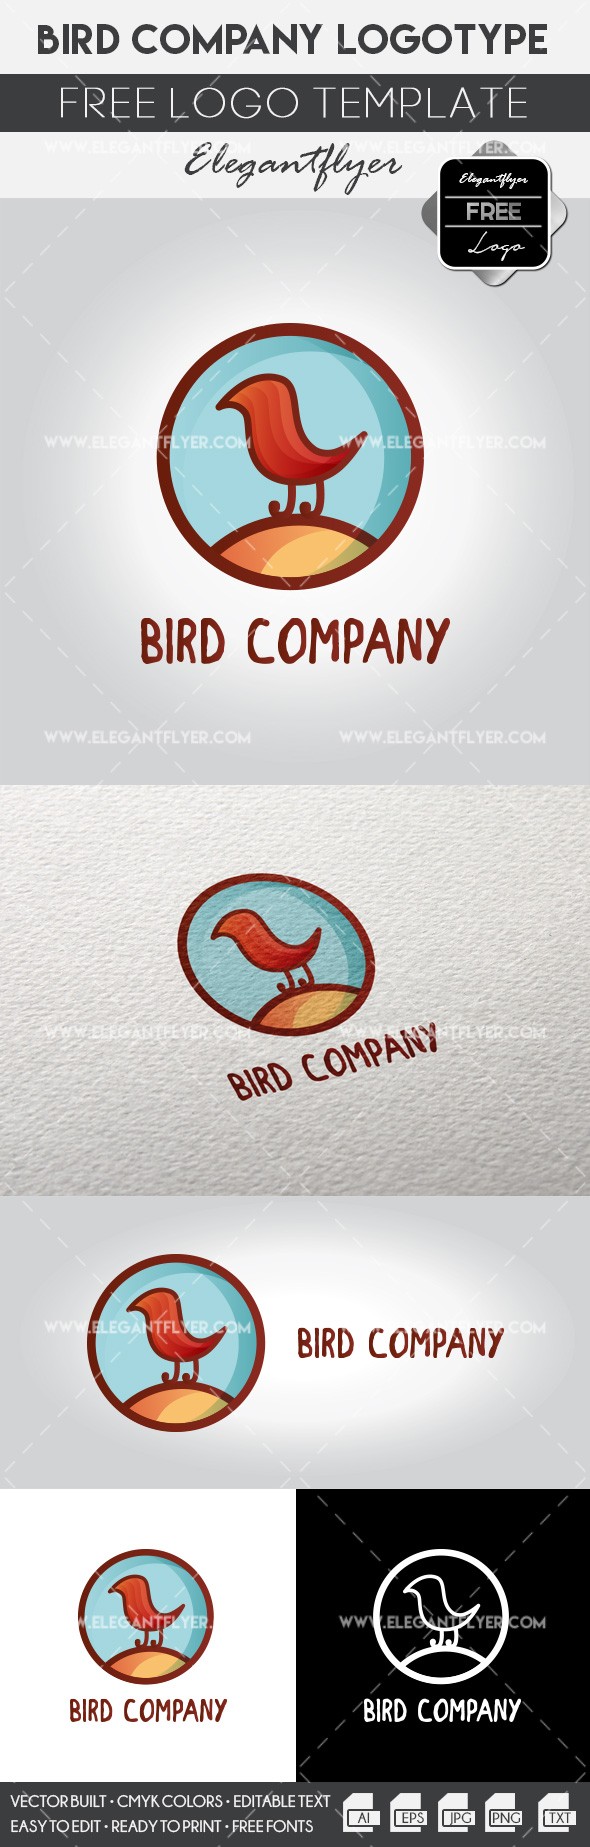 Bird company by ElegantFlyer